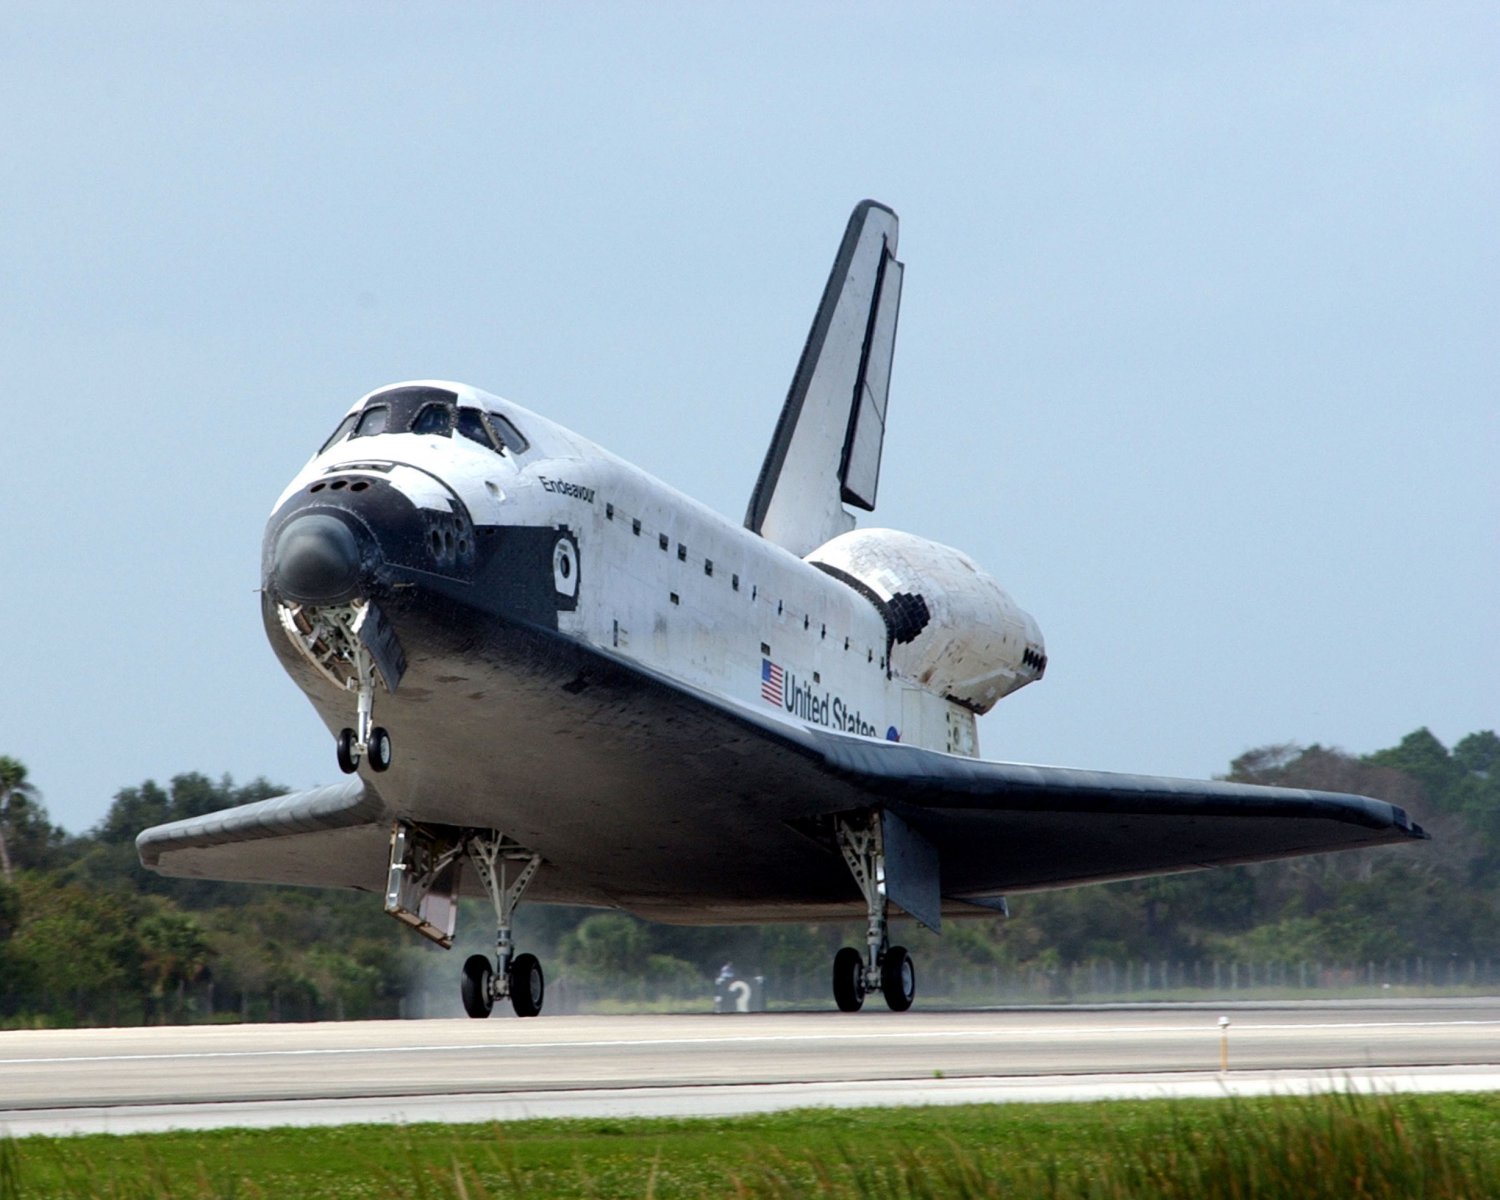 space shuttle endeavor